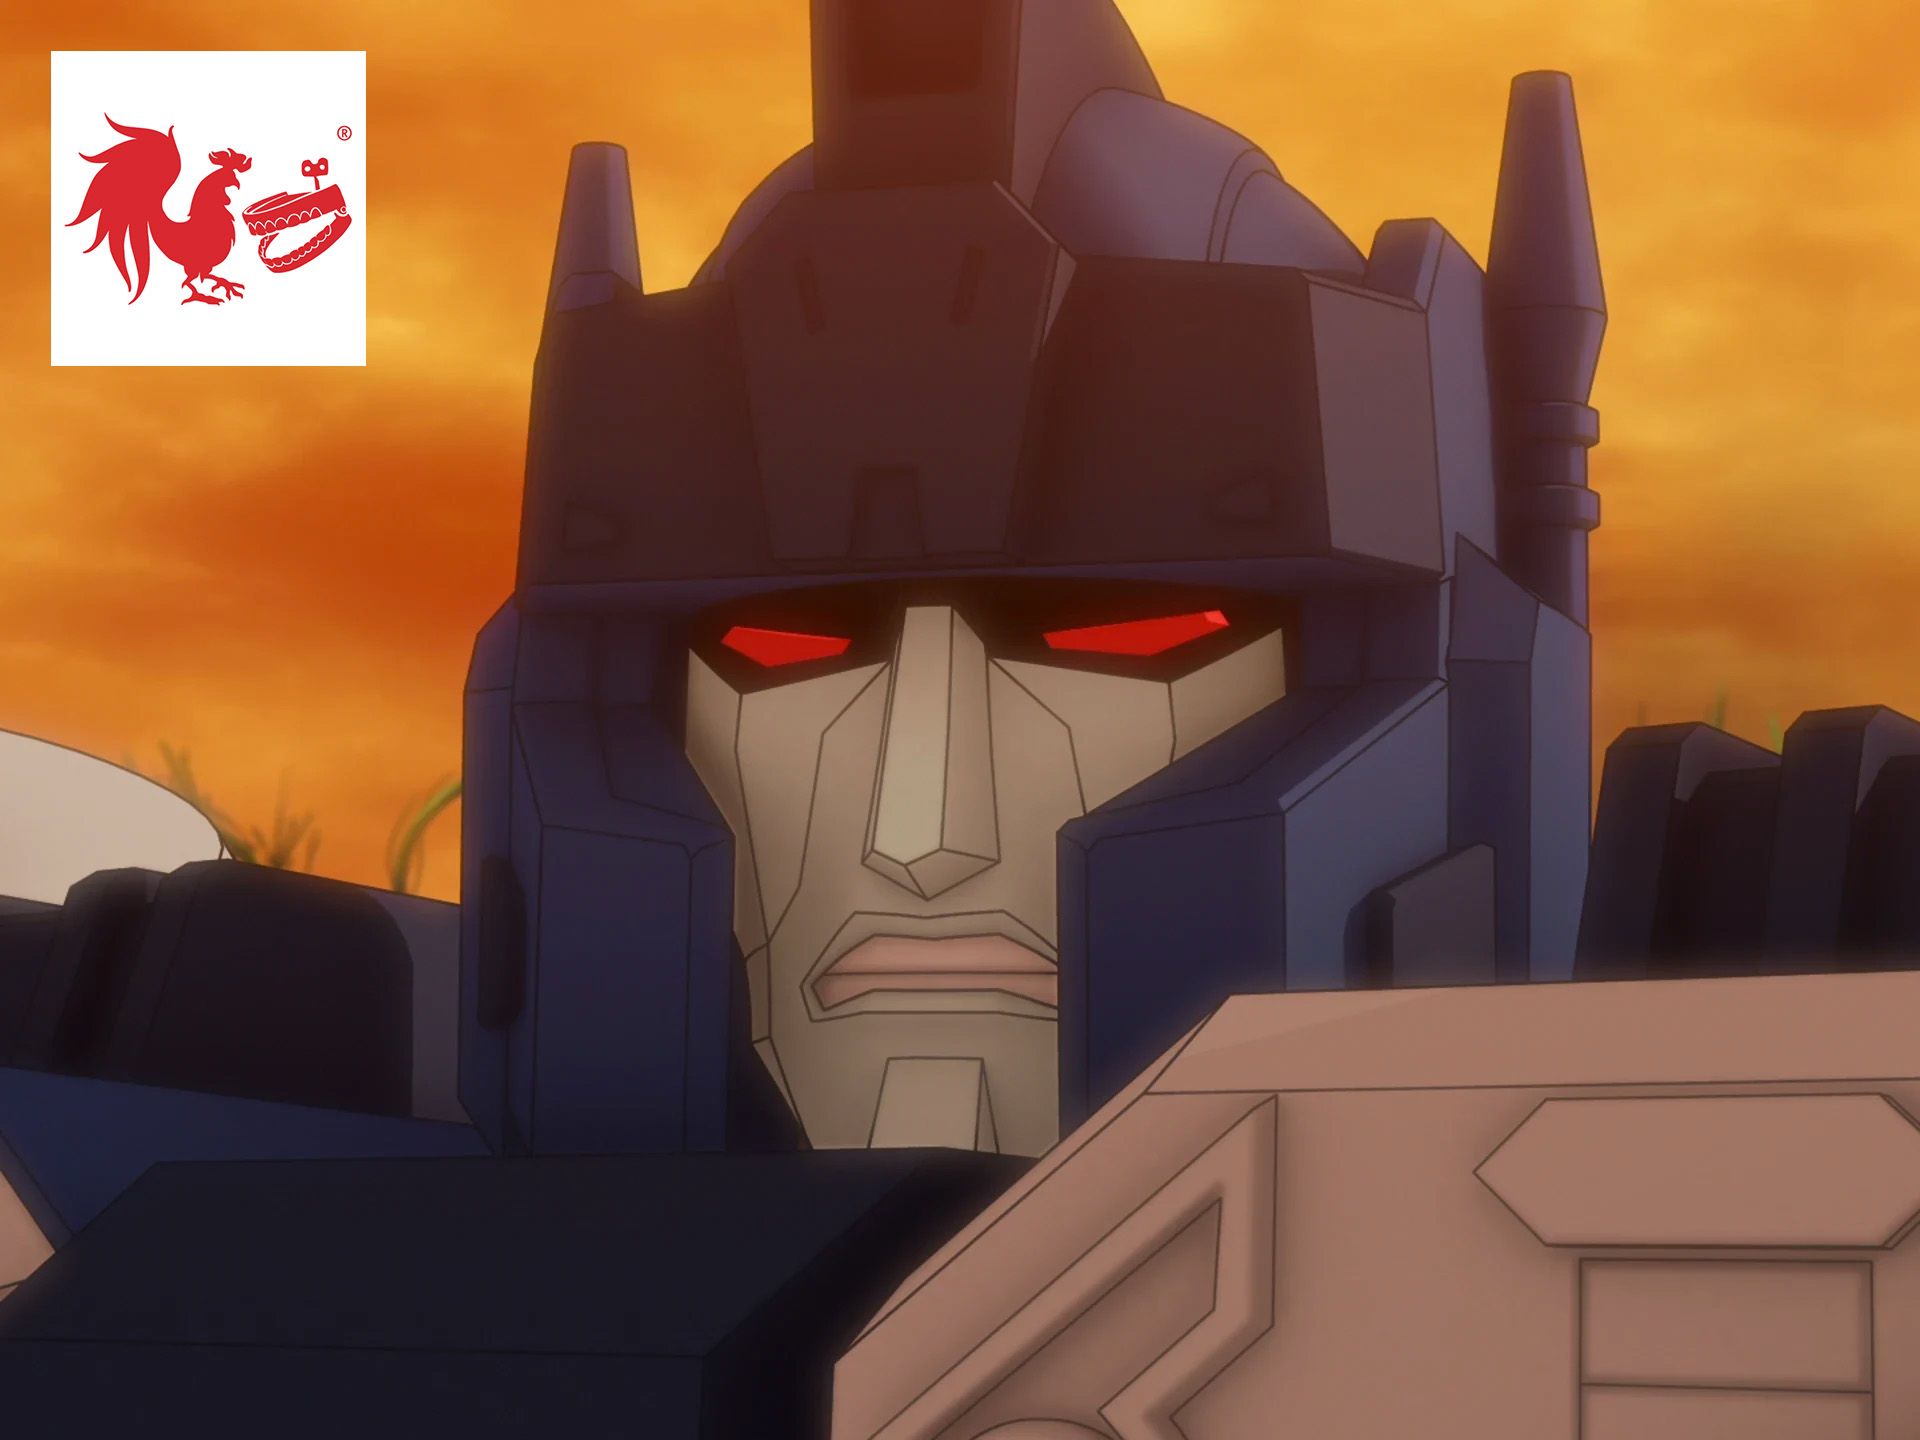 Transformers: Prime, S03 E04, Beast Hunters, Cartoon, Animation